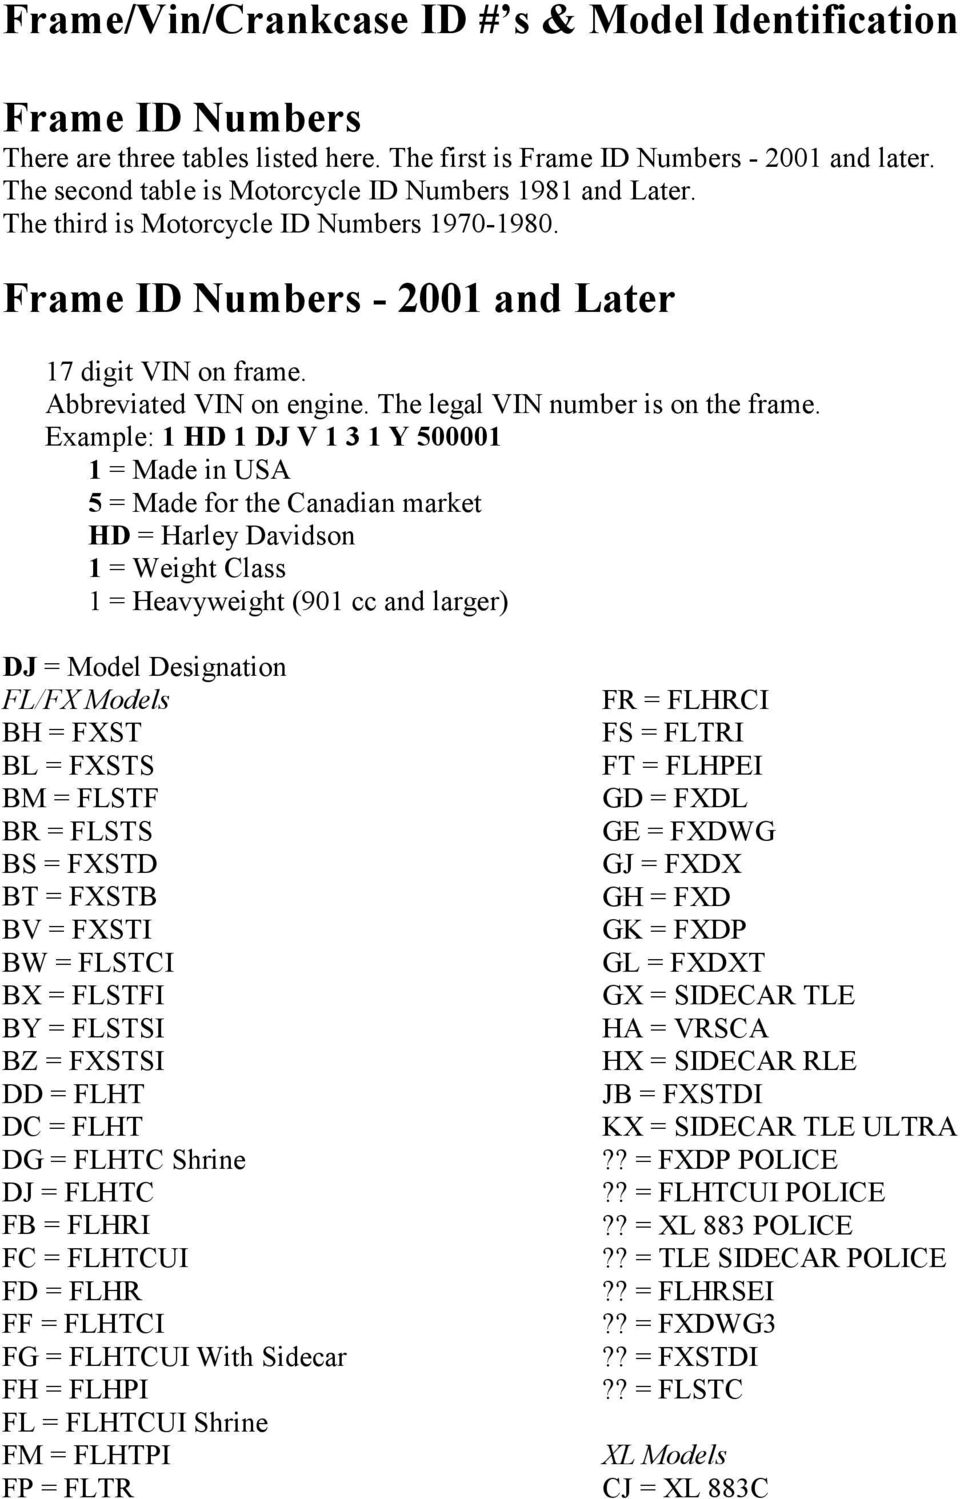 Frame Vin Crankcase Id S Model Identification Pdf Free Download